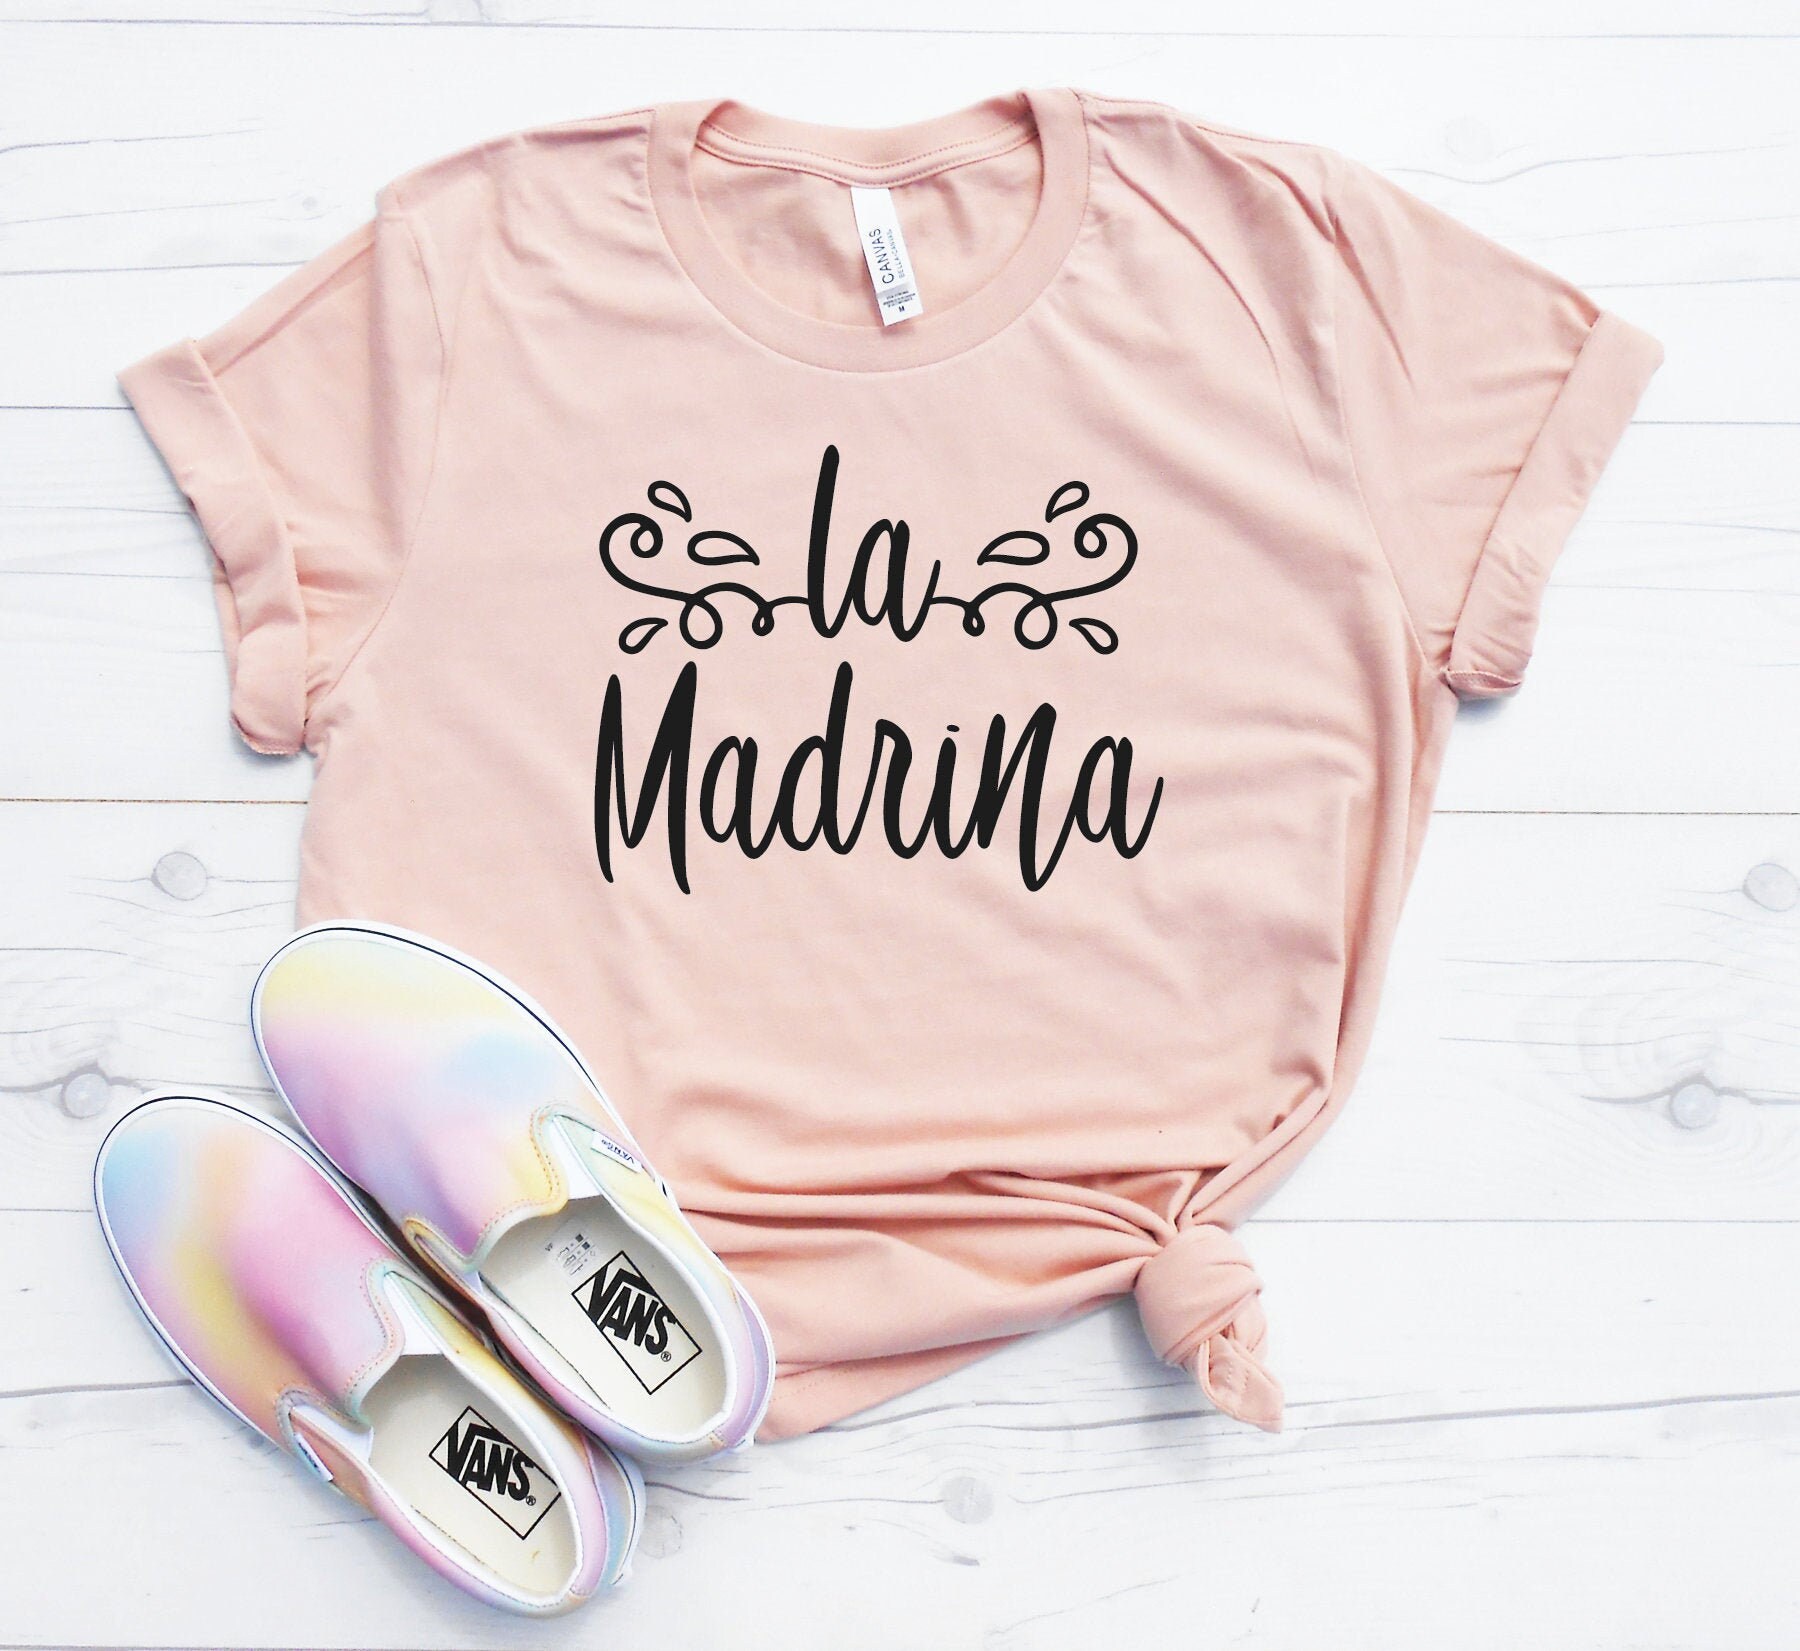 Madrina shirts